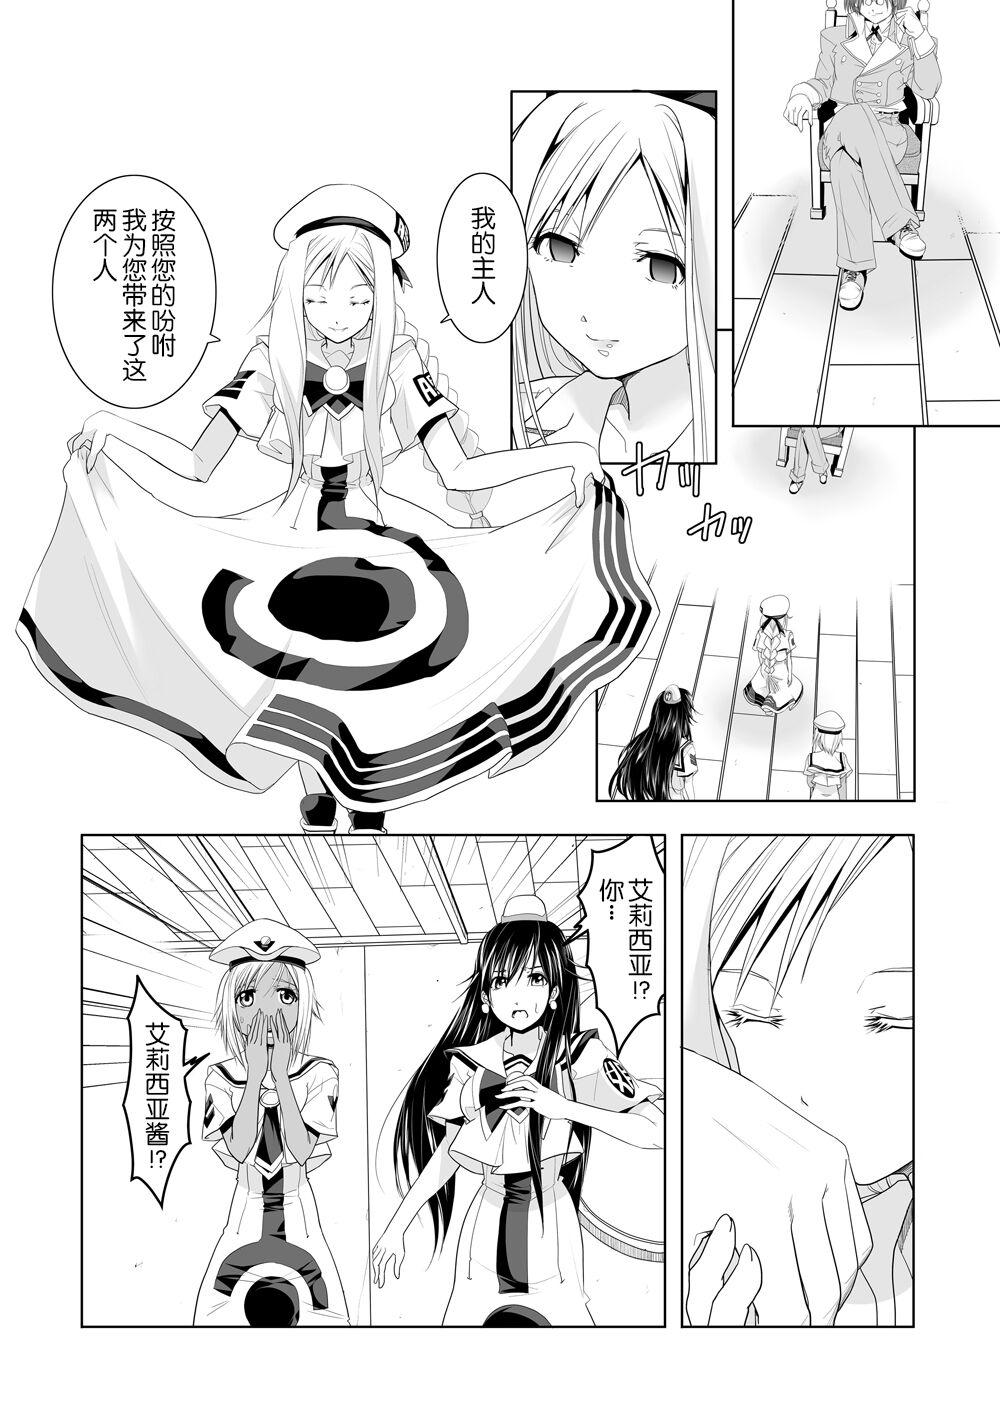 Weird AR*A Mind-control Manga - Aria Amigos - Page 6